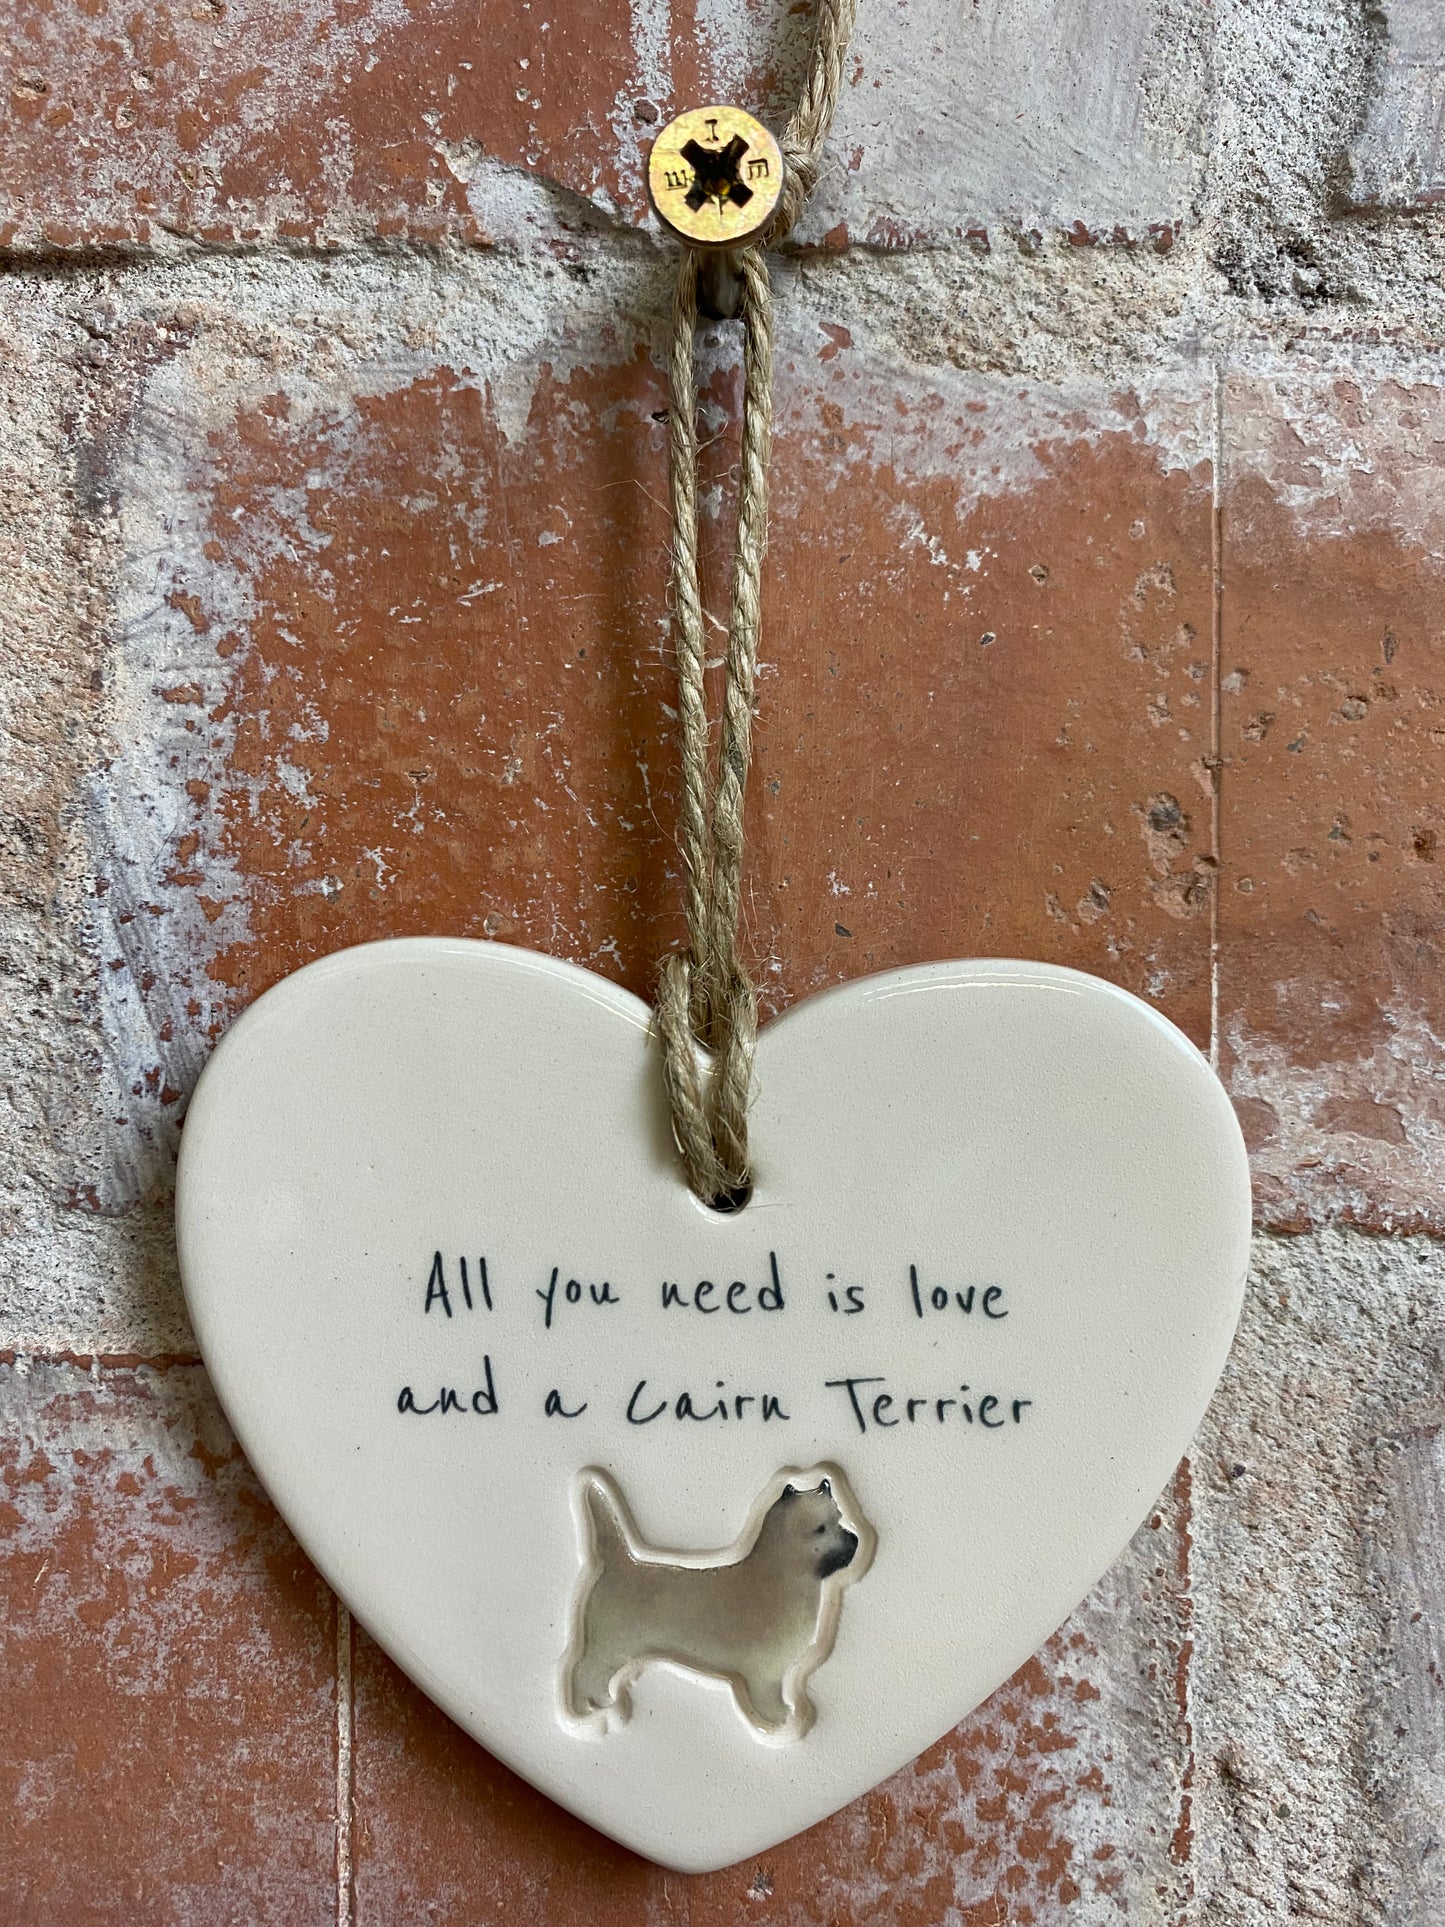 Cairn Terrier ceramic heart